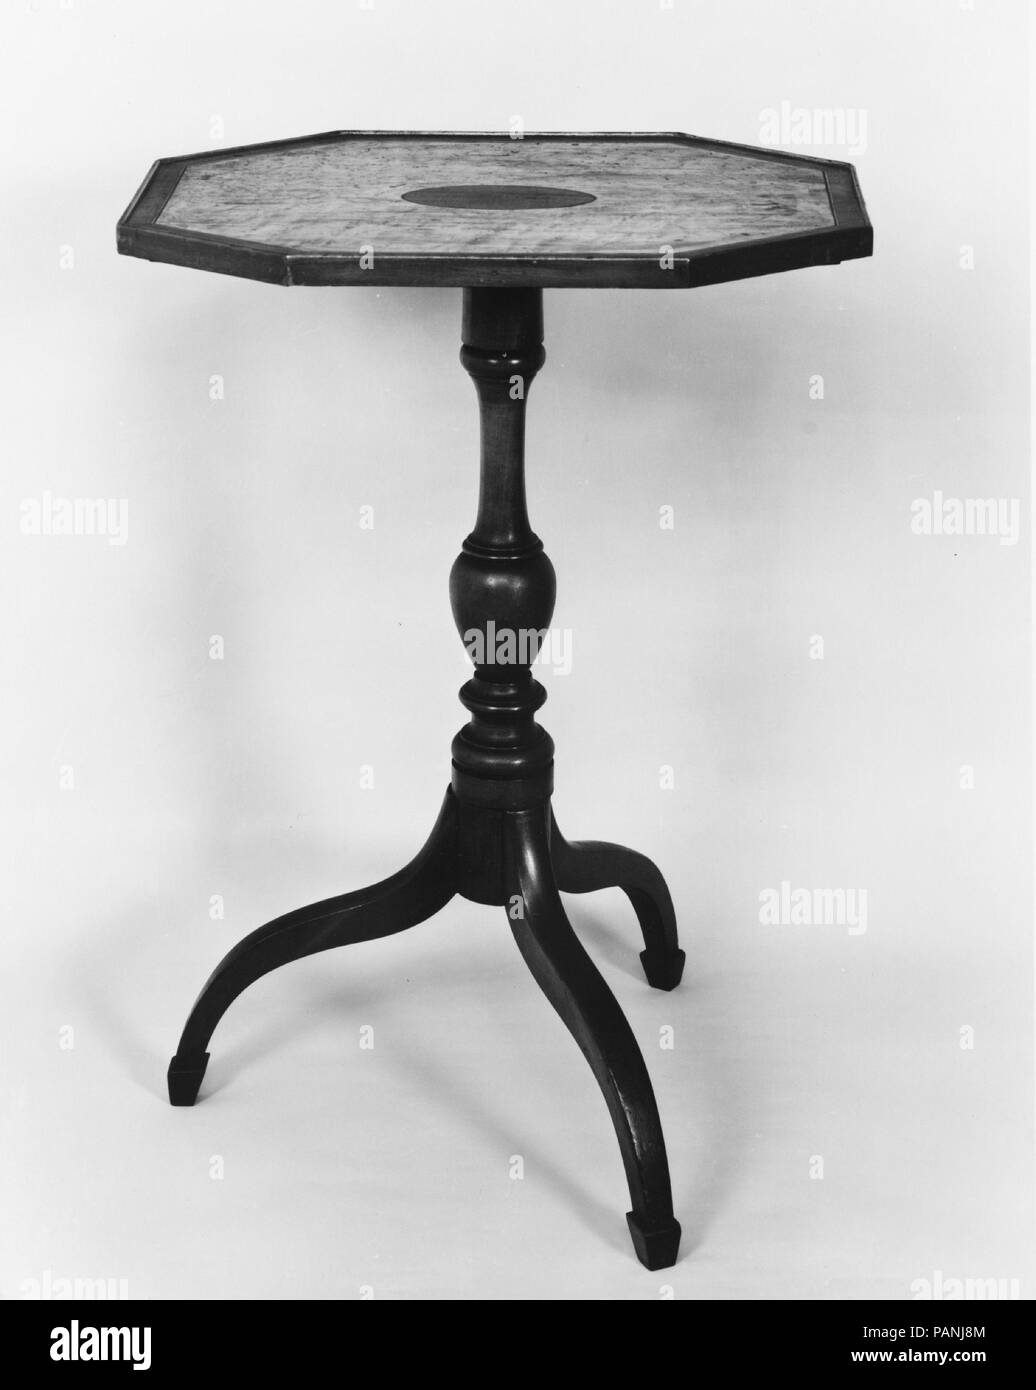 Tilt-top Tea Table. Culture: American. Dimensions: 27 1/2 x 19 x 14 1/2 in. (69.9 x 48.3 x 36.8 cm). Date: ca. 1800. Museum: Metropolitan Museum of Art, New York, USA. Stock Photo